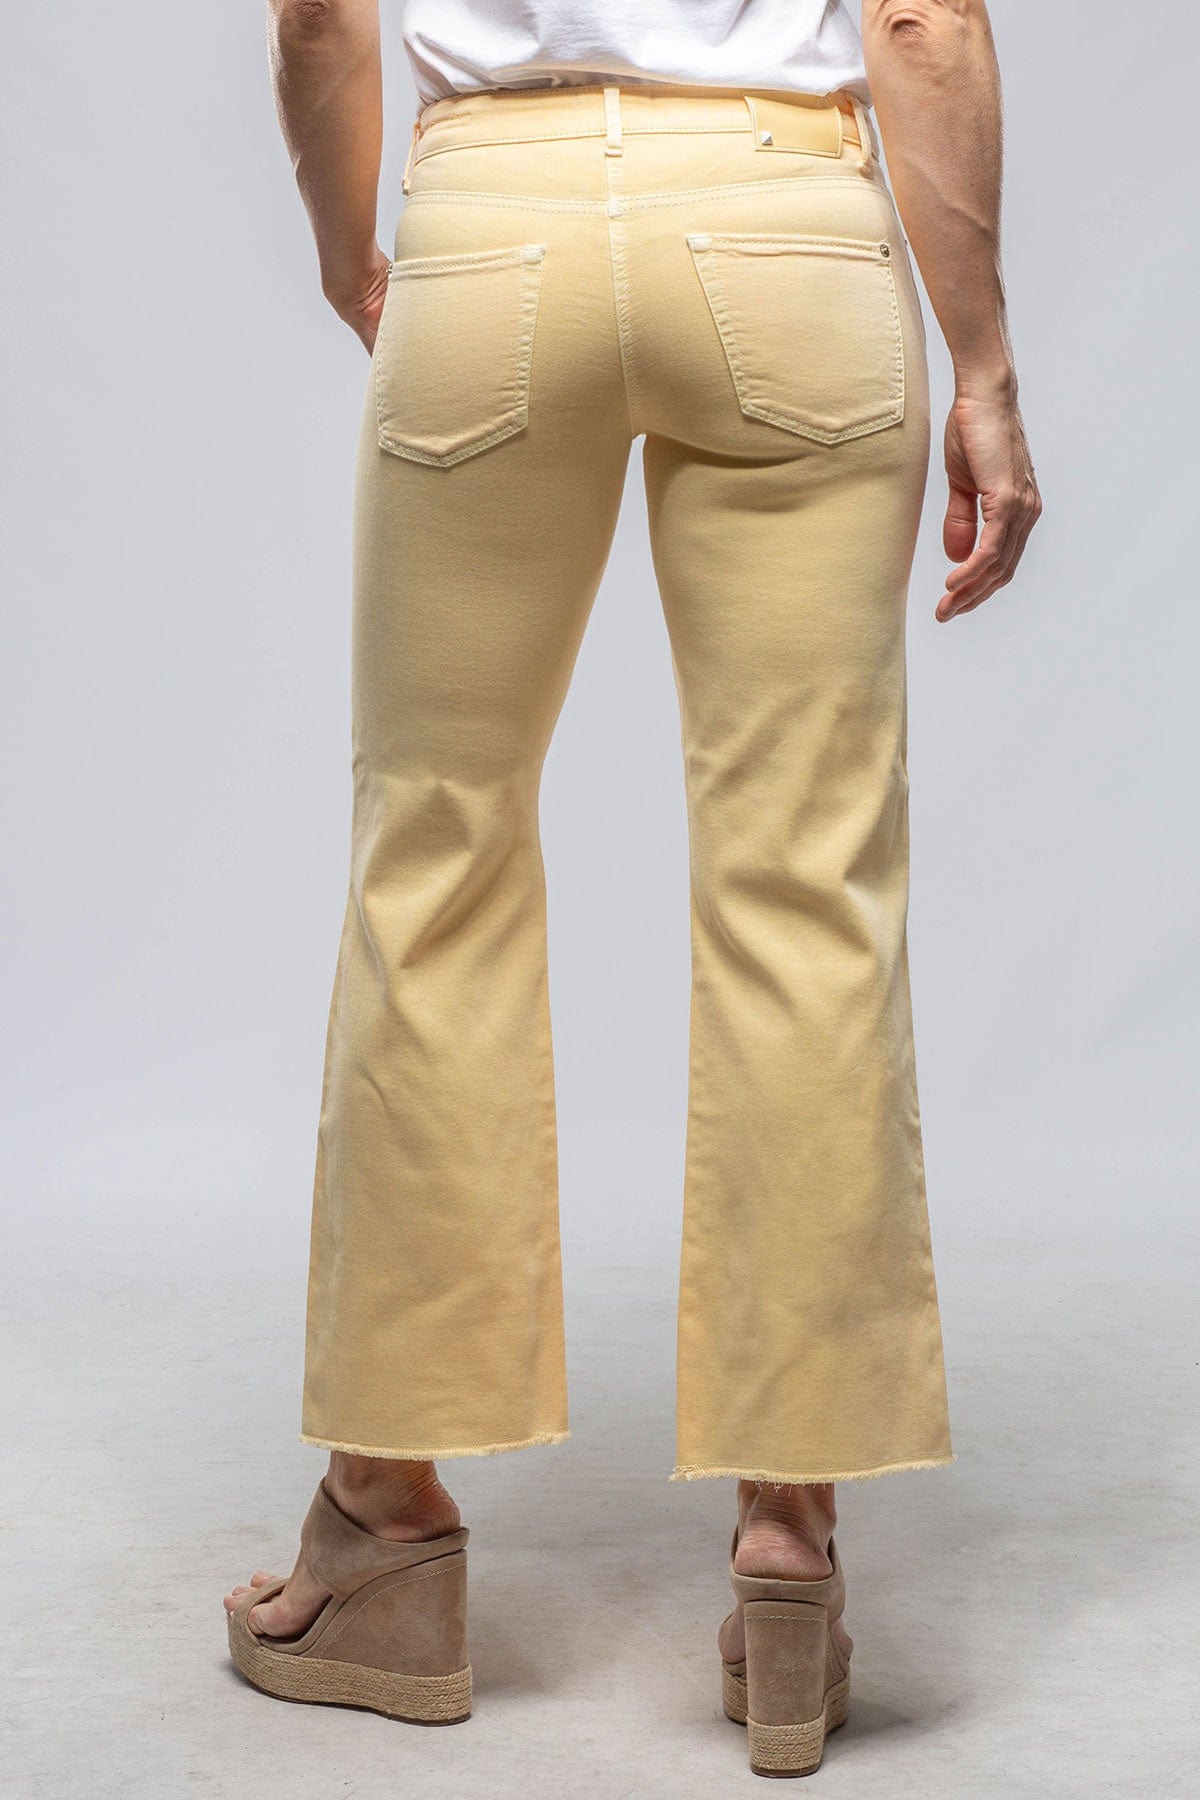 Cambio Francesca Cropped Jeans Ladies - Pants - Jeans